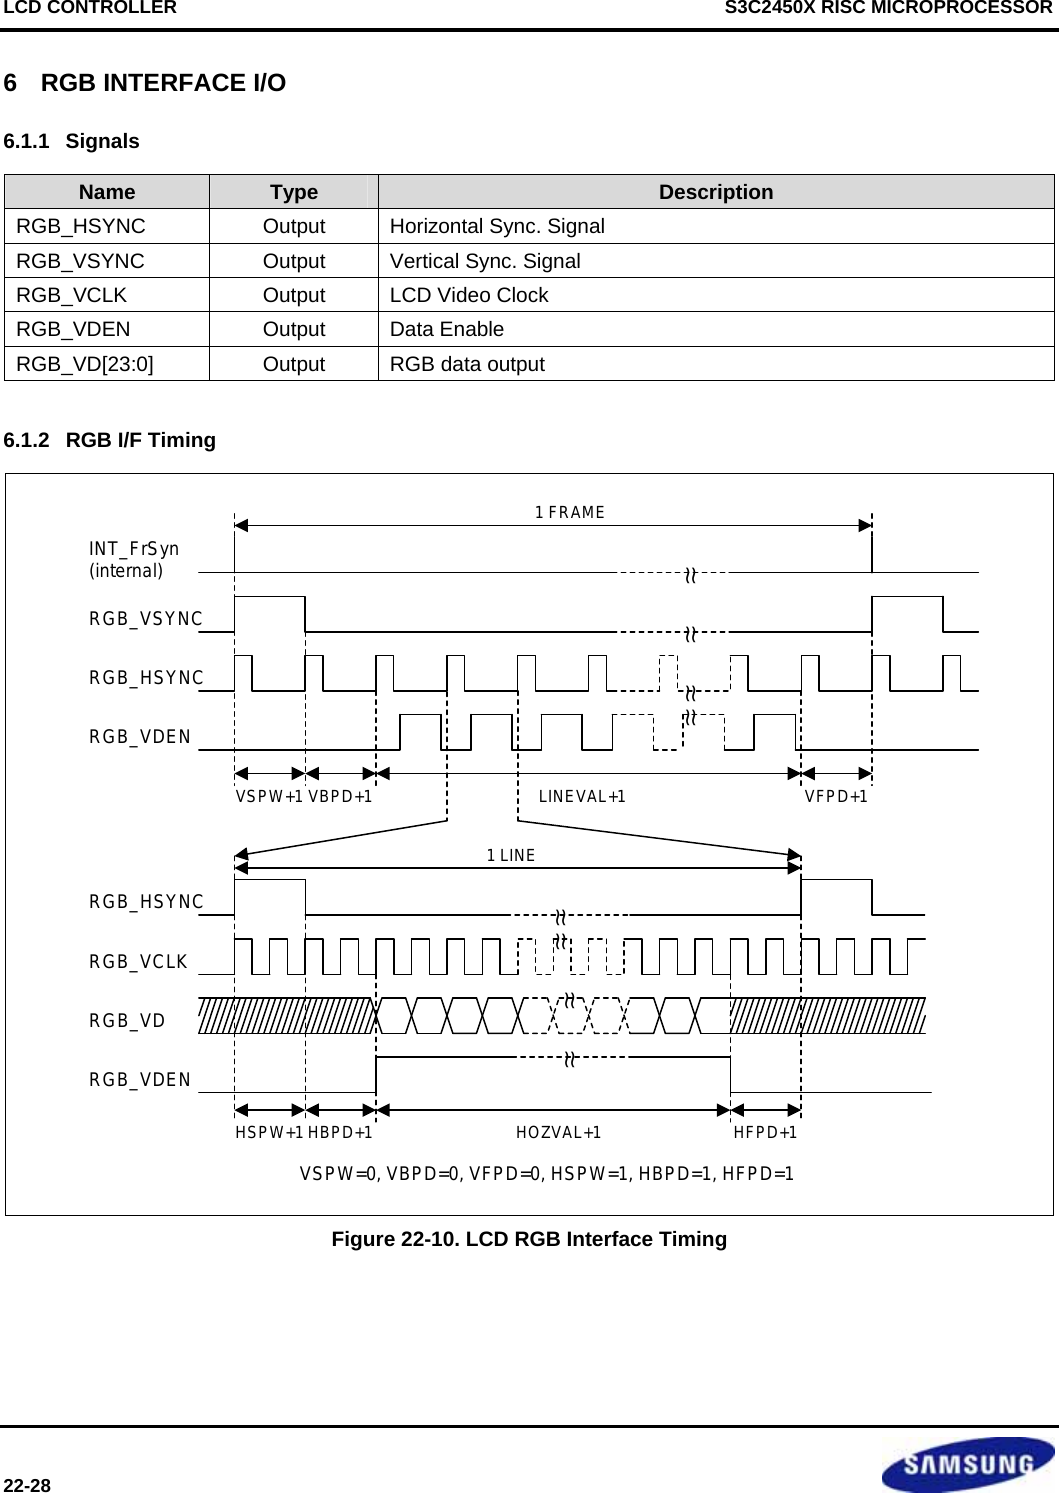 LCD CONTROLLER     S3C2450X RISC MICROPROCESSOR 22-28    6  RGB INTERFACE I/O 6.1.1 Signals Name  Type  Description RGB_HSYNC  Output  Horizontal Sync. Signal RGB_VSYNC  Output  Vertical Sync. Signal RGB_VCLK  Output  LCD Video Clock  RGB_VDEN Output Data Enable RGB_VD[23:0]  Output  RGB data output  6.1.2  RGB I/F Timing VSPW+1 VBPD+1 LINEVAL+1 VFPD+11 FRAMEINT_FrSyn(internal)RGB_VSYNCRGB_HSYNCRGB_VDEN~~~~~~~~~~~~1 LINE~~~~HSPW+1 HBPD+1 HOZVAL+1 HFPD+1RGB_HSYNCRGB_VCLKRGB_VDRGB_VDENVSPW=0, VBPD=0, VFPD=0, HSPW=1, HBPD=1, HFPD=1 Figure 22-10. LCD RGB Interface Timing 